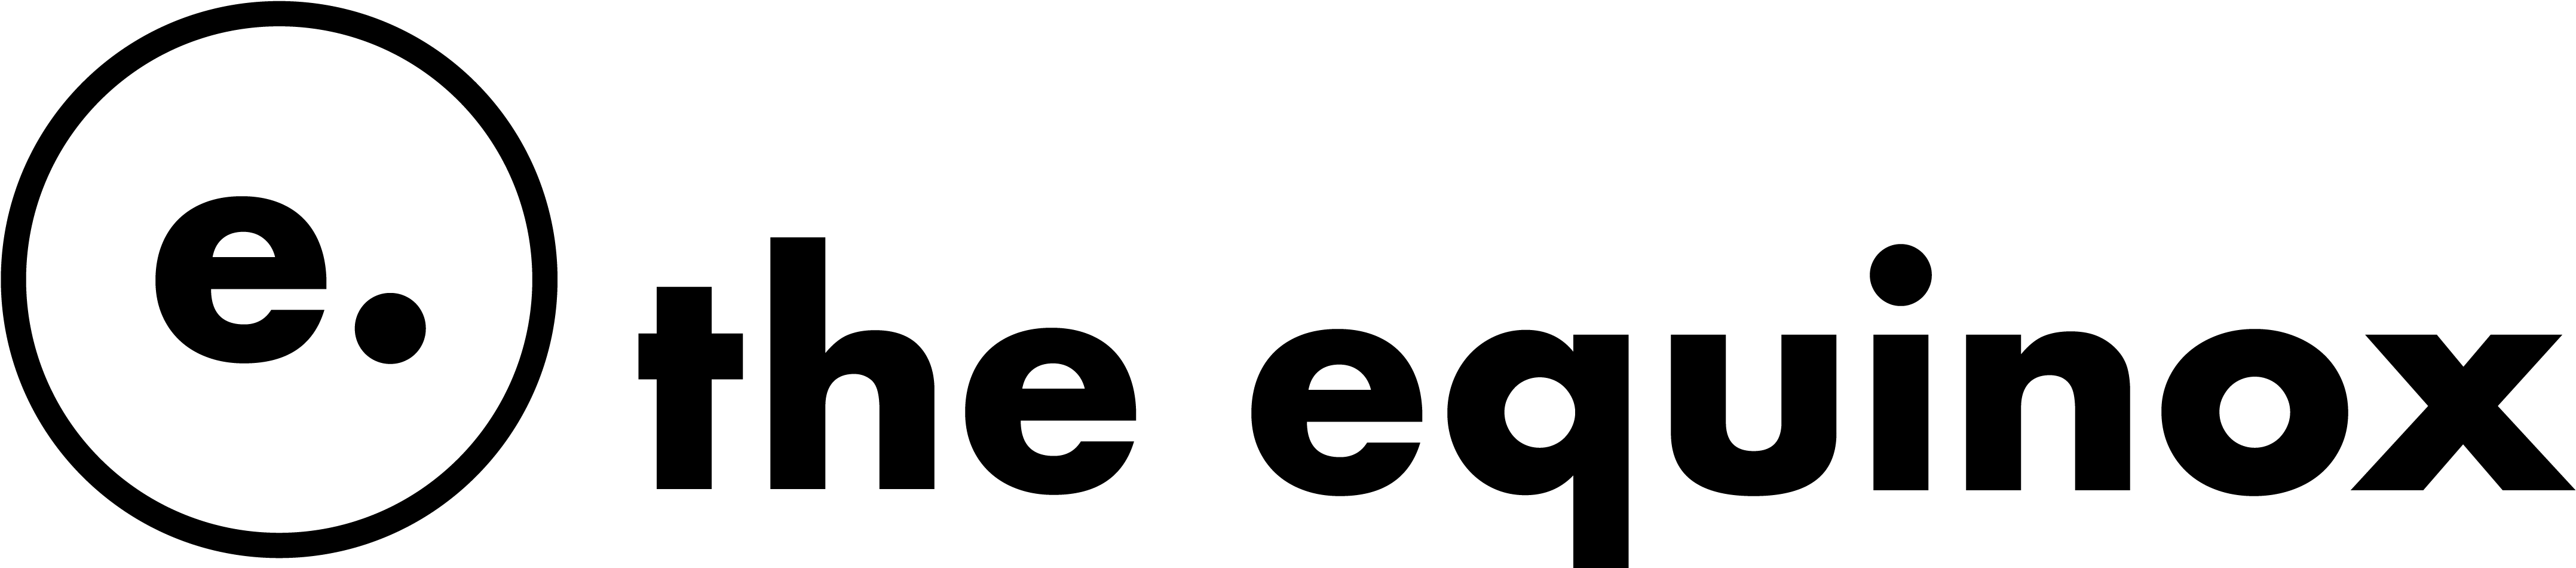 Funcom. .Black Телеканал логотип. Funcom logo. Funcom logo PNG.